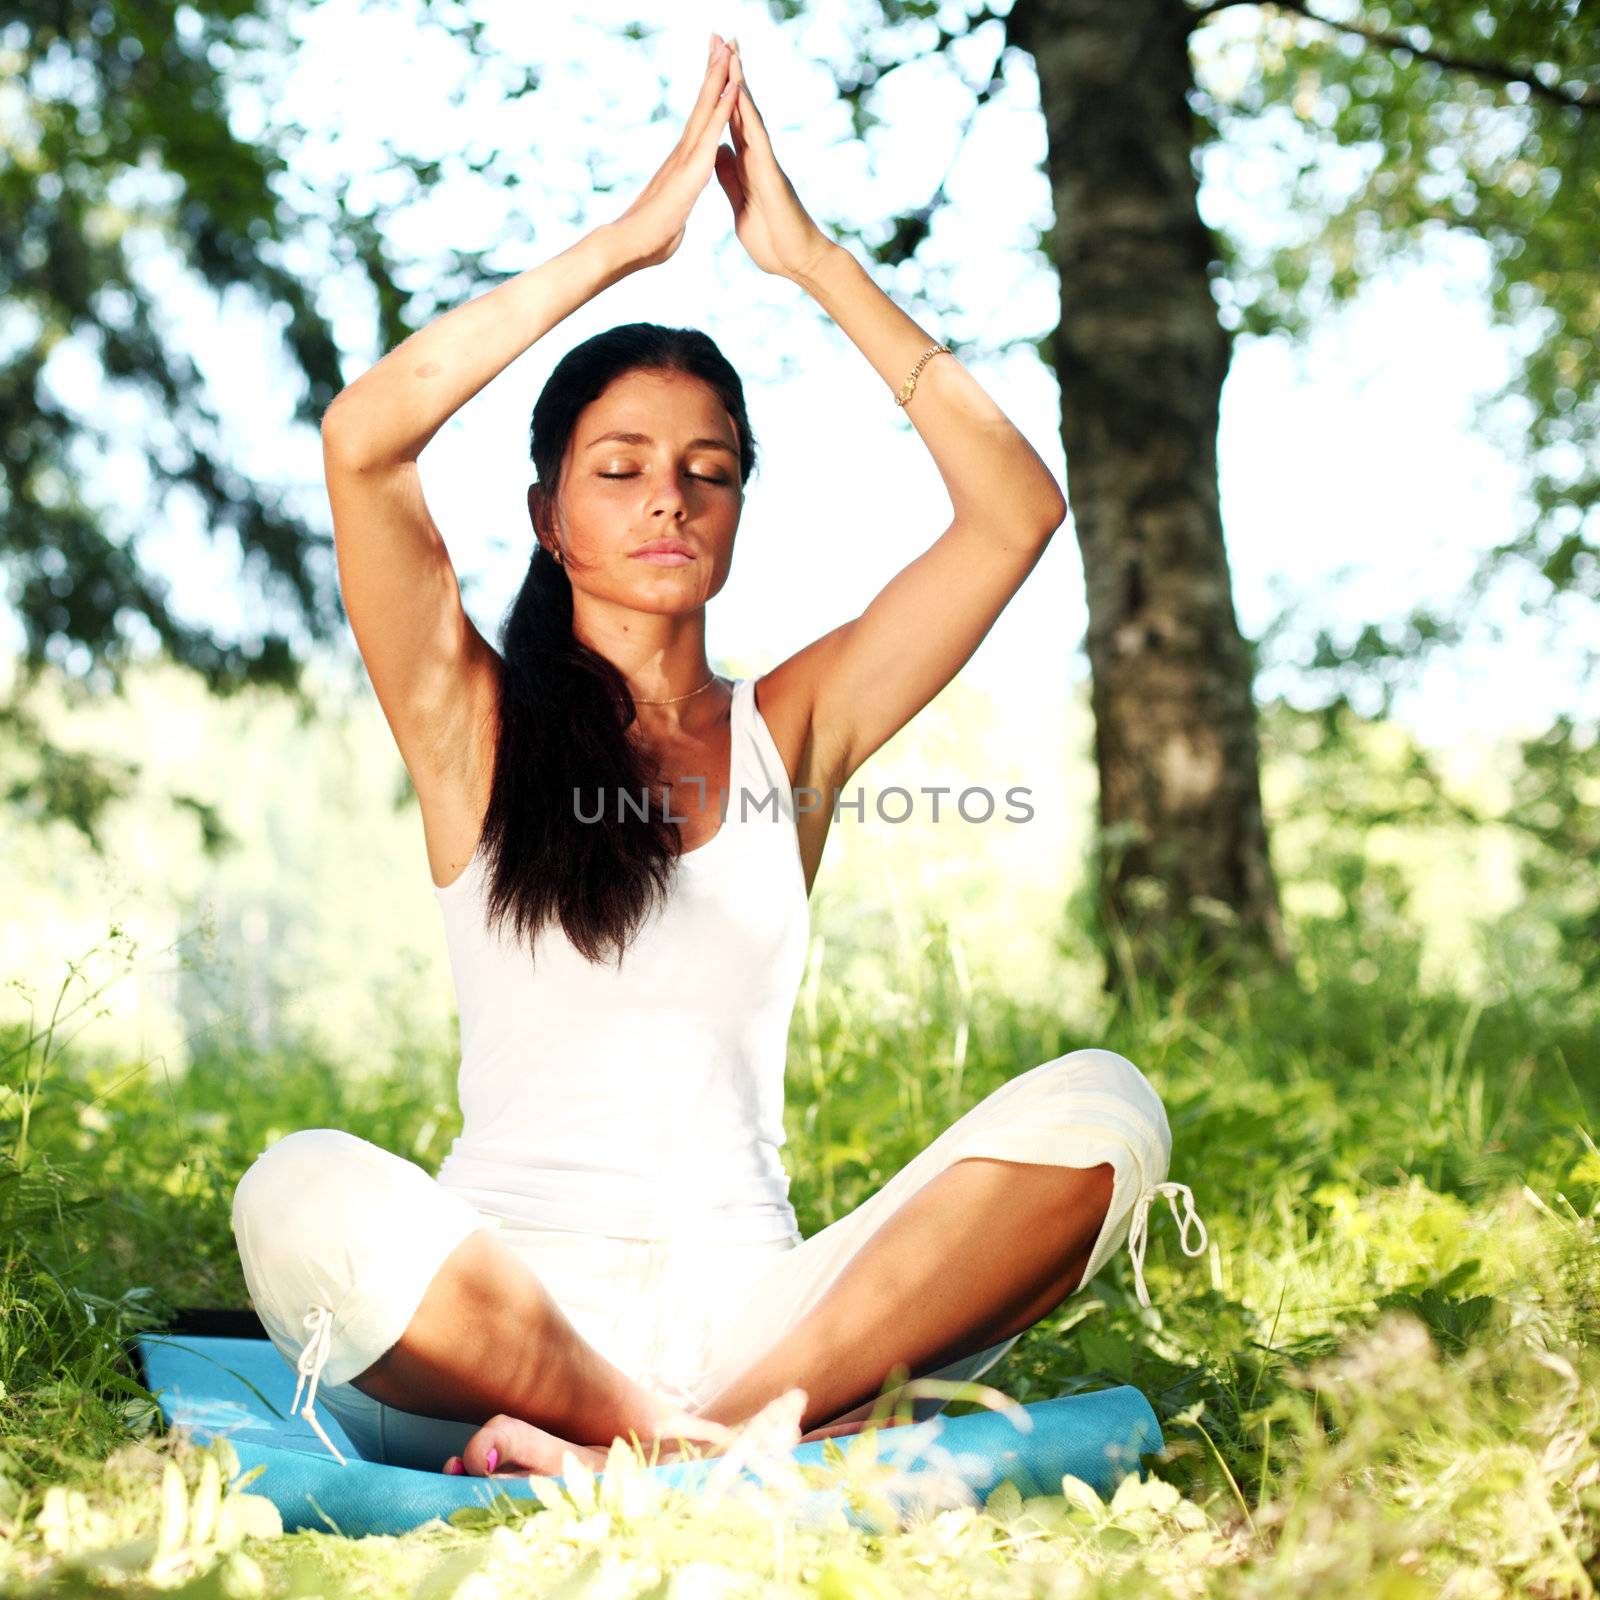  yoga woman on green grass in lotus pose